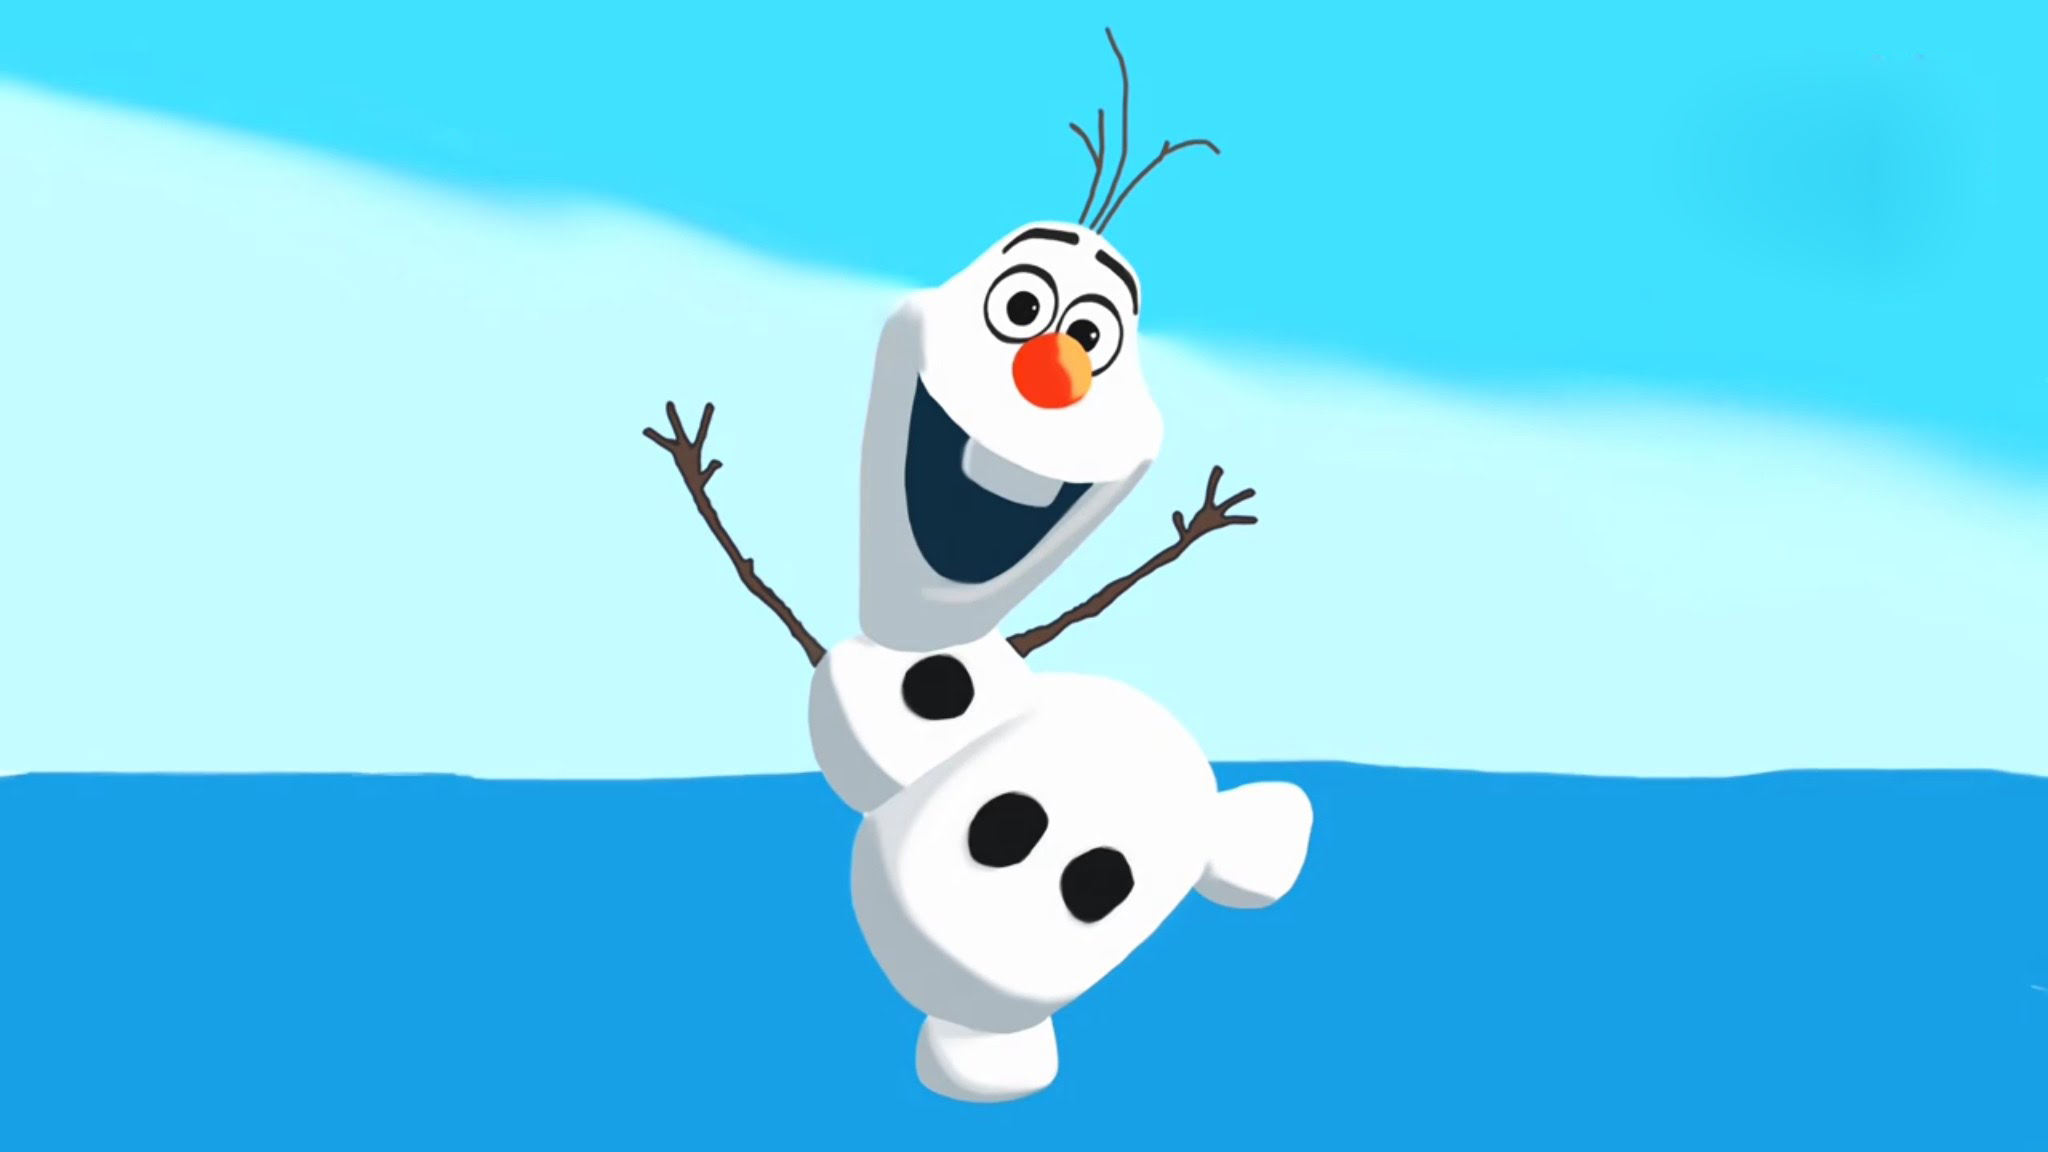 Olaf The Snowman Cartoon - 2048x1152 Wallpaper 